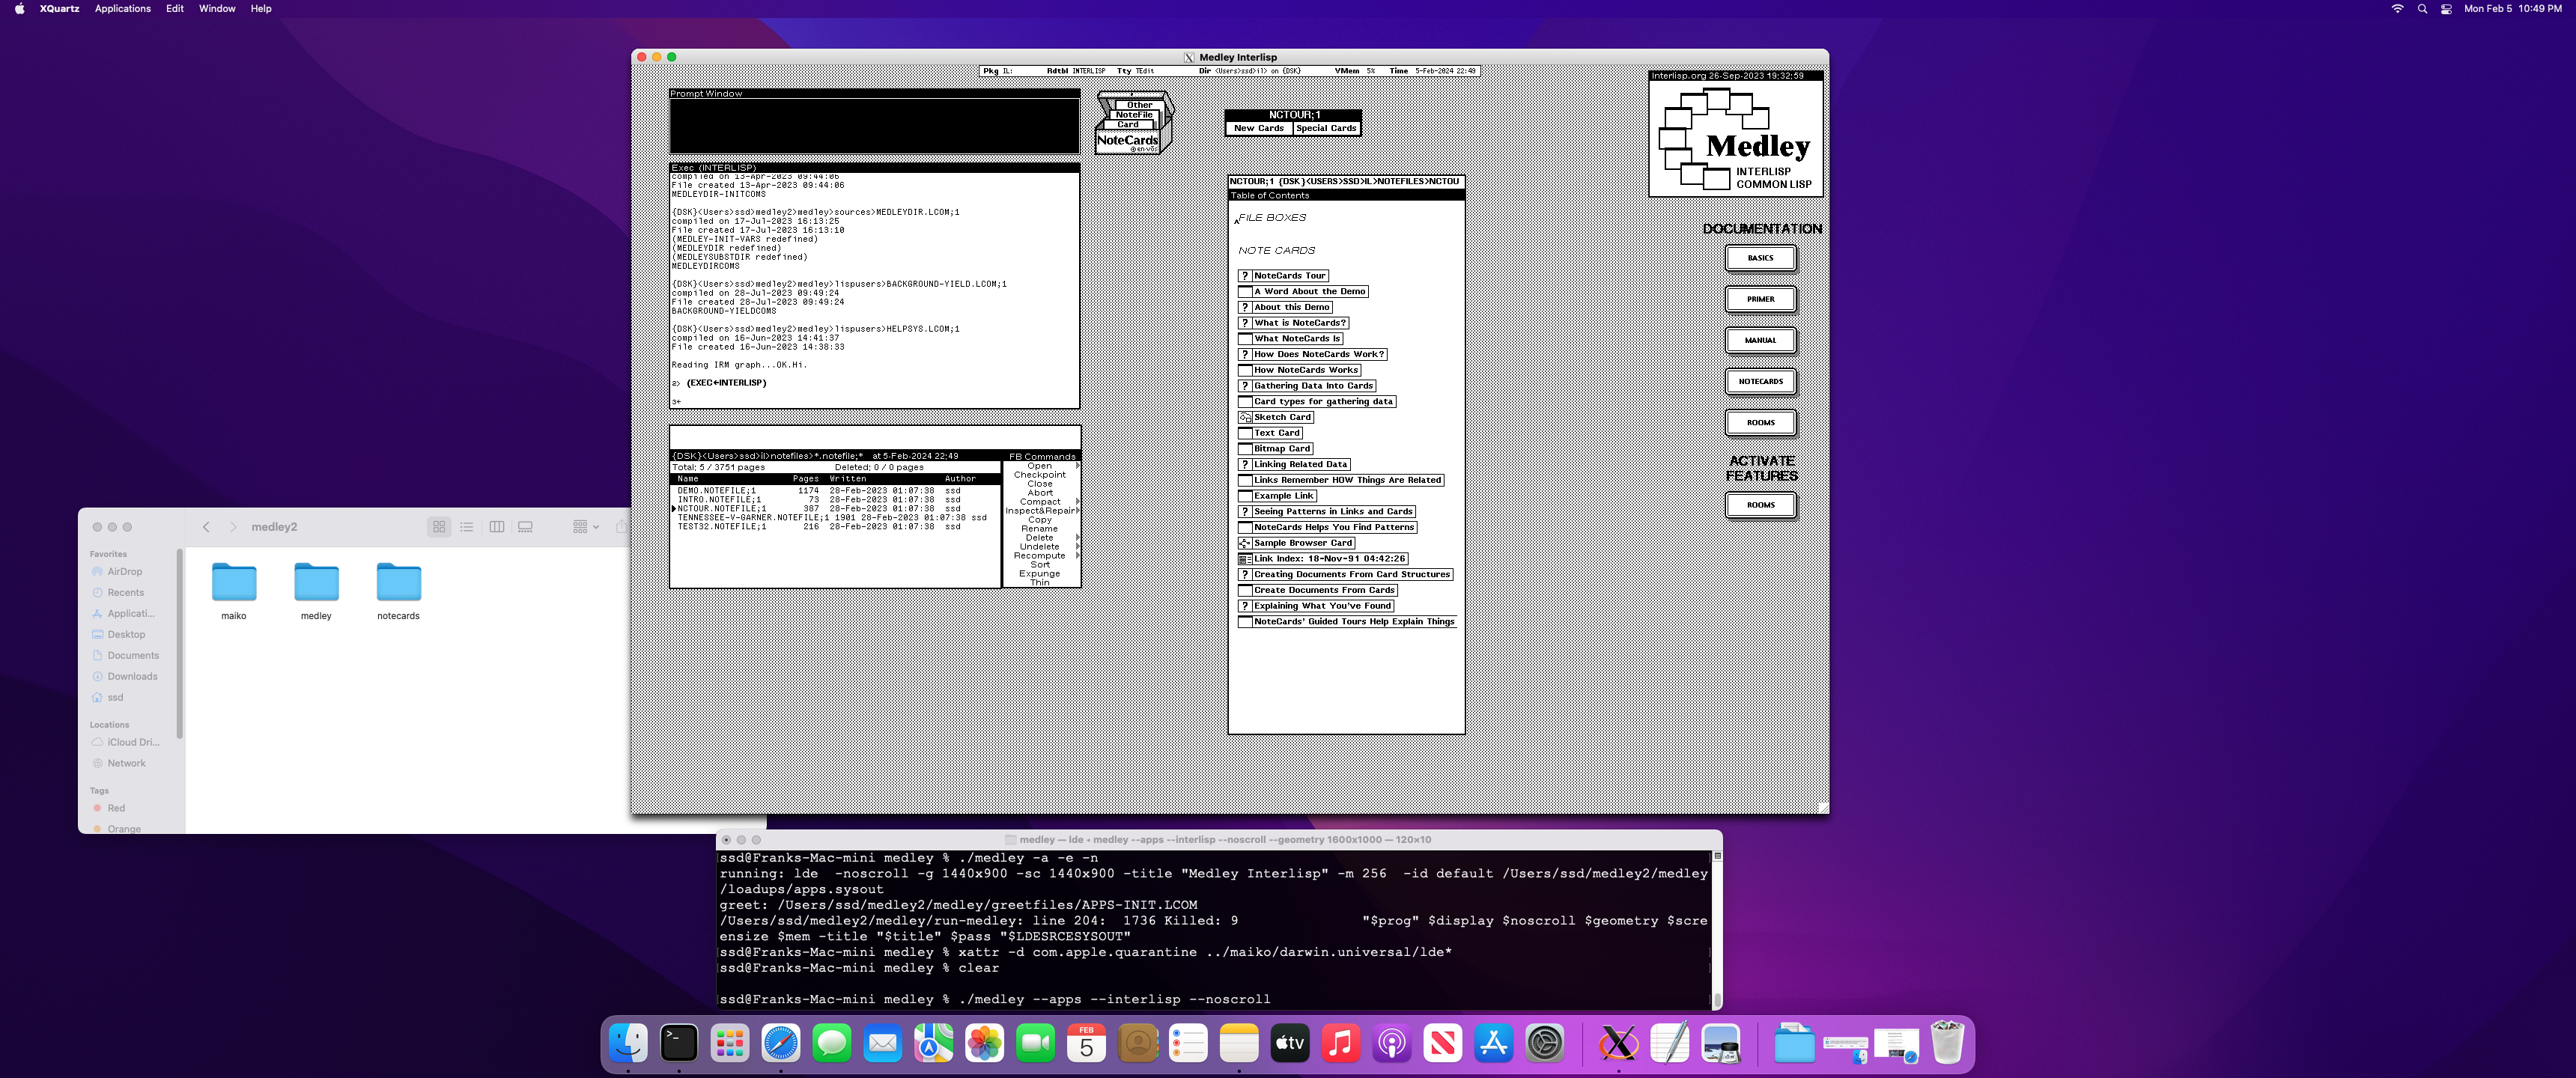 Medley window open on MacOS desktop